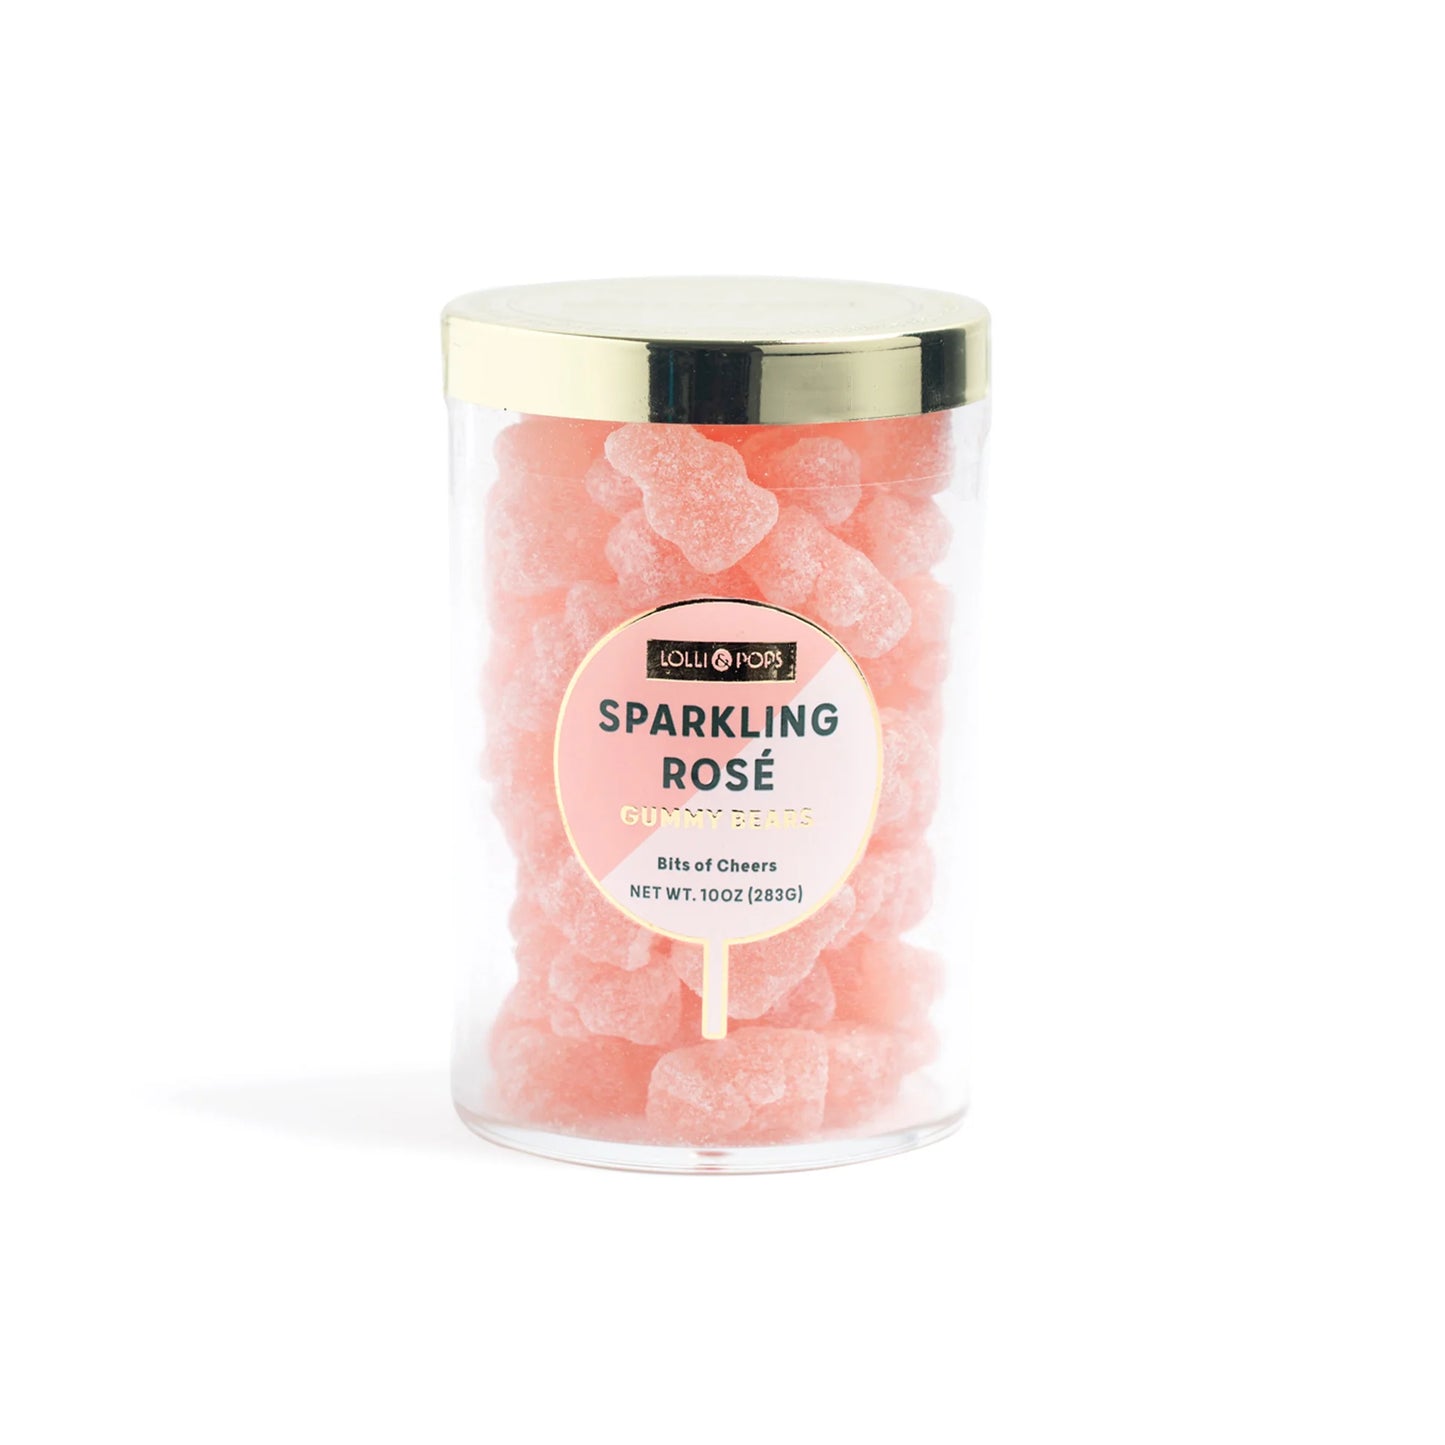 Sparkling Rose Gummy Bears